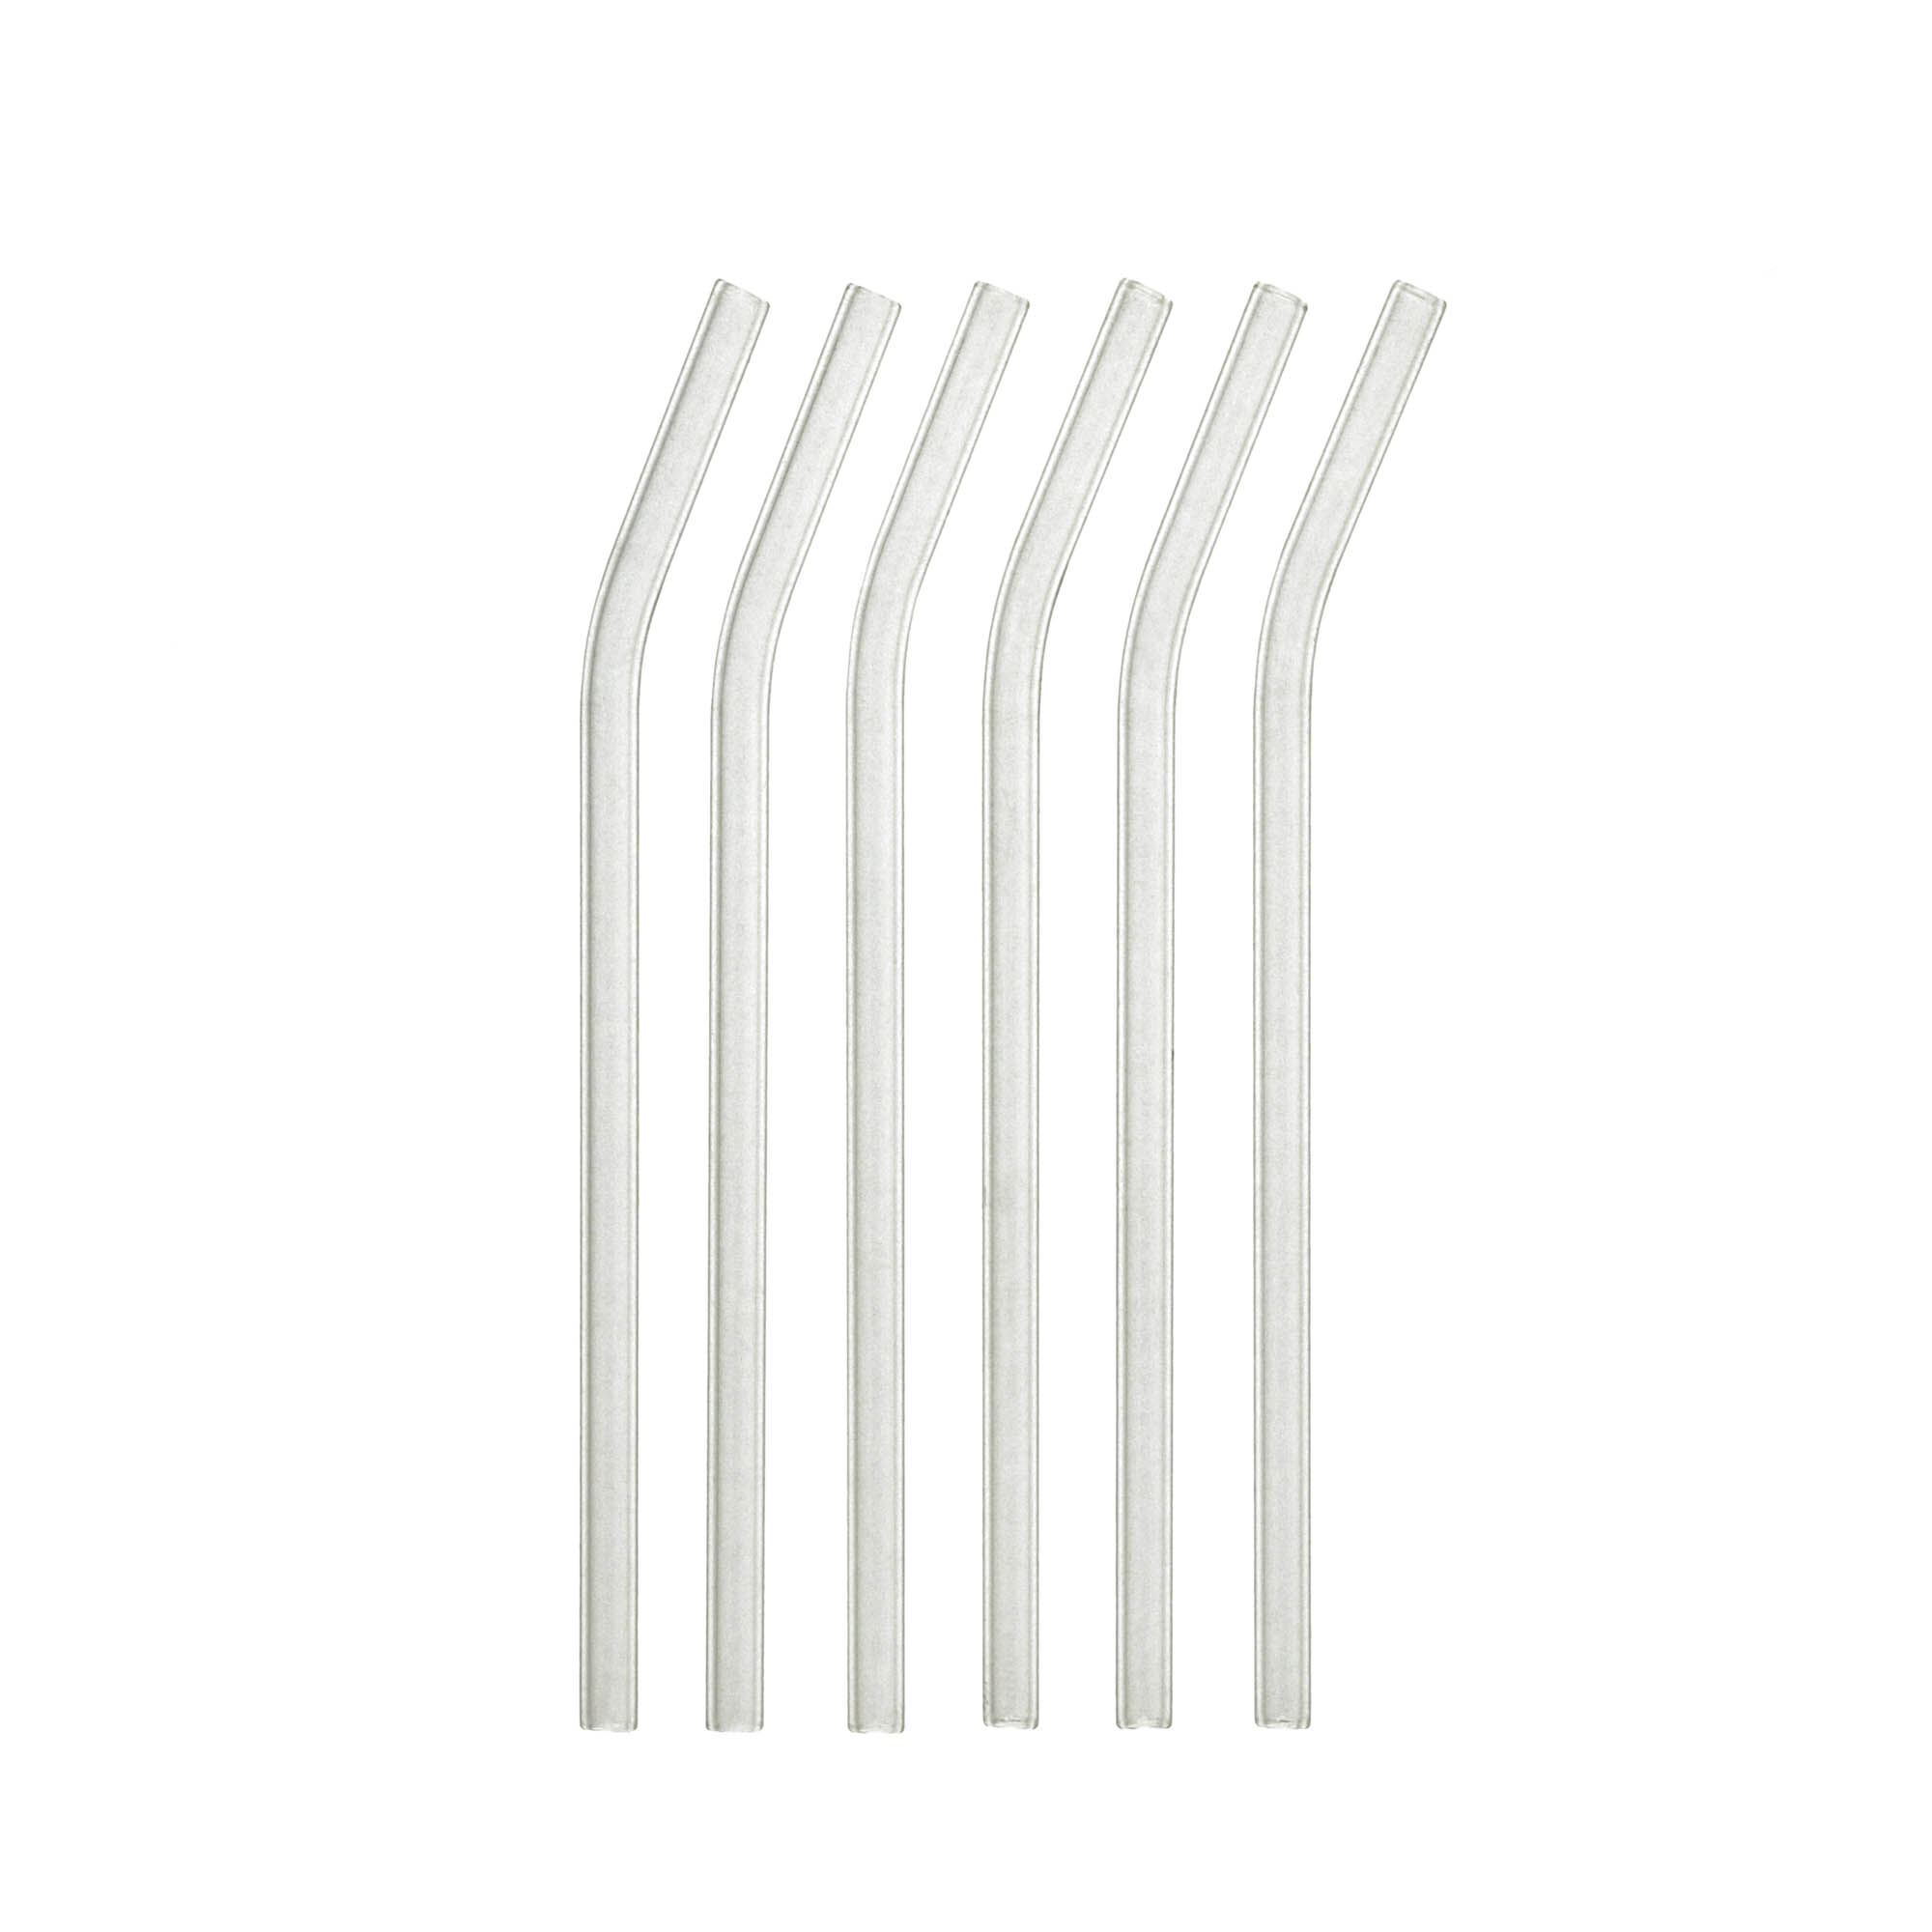 Kave Home Gillia set of 6 clear glass reusable straws